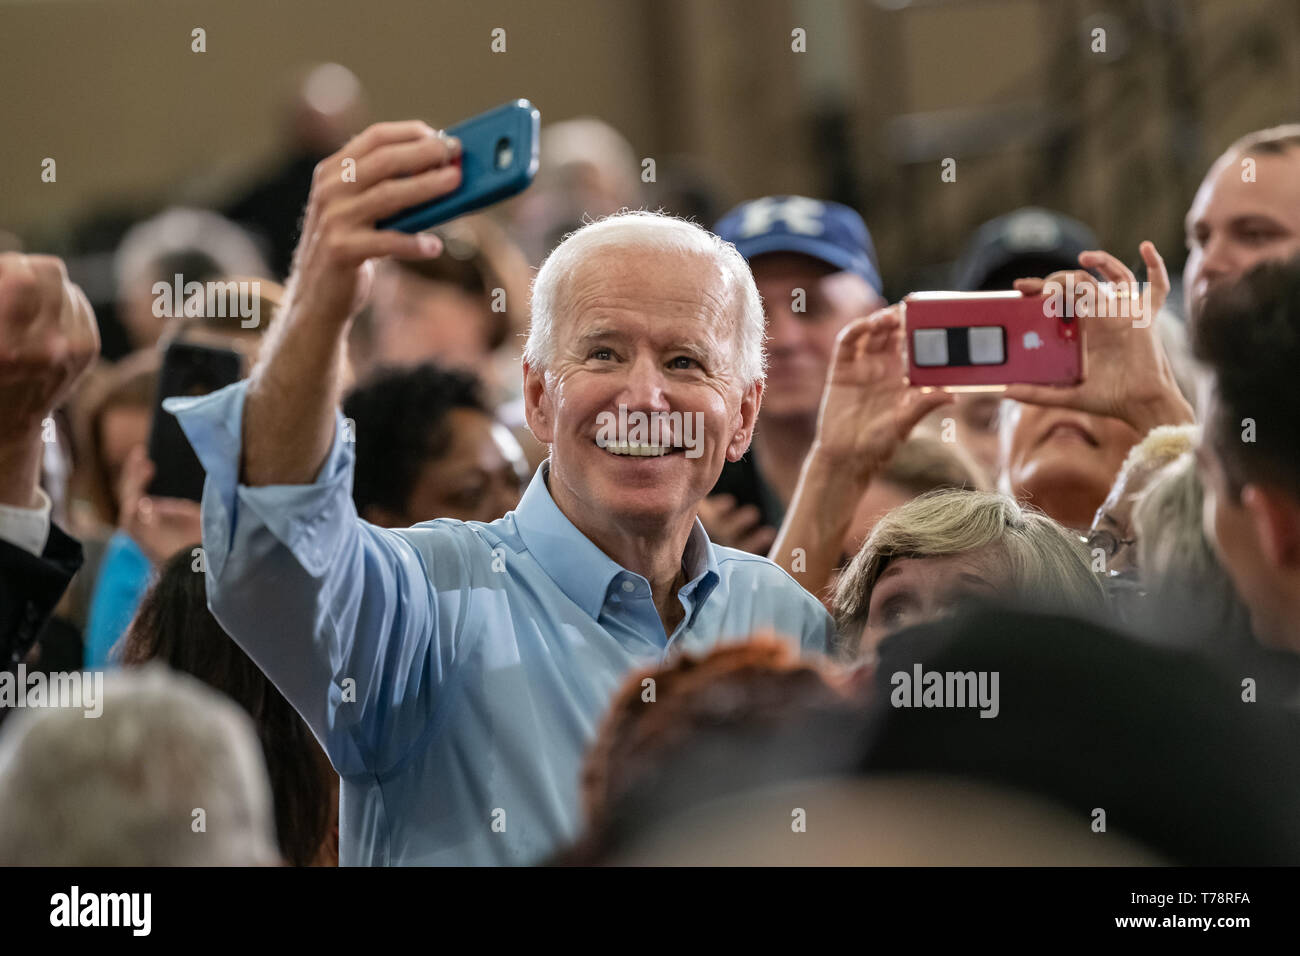 Columbia, South Carolina USA - Mai 4, 2019: 2020 Präsidentschaftskandidaten Joe Biden (D) grüsst potenzielle Unterstützer nach einer Kampagne Anschlag in Kolumbien. Stockfoto